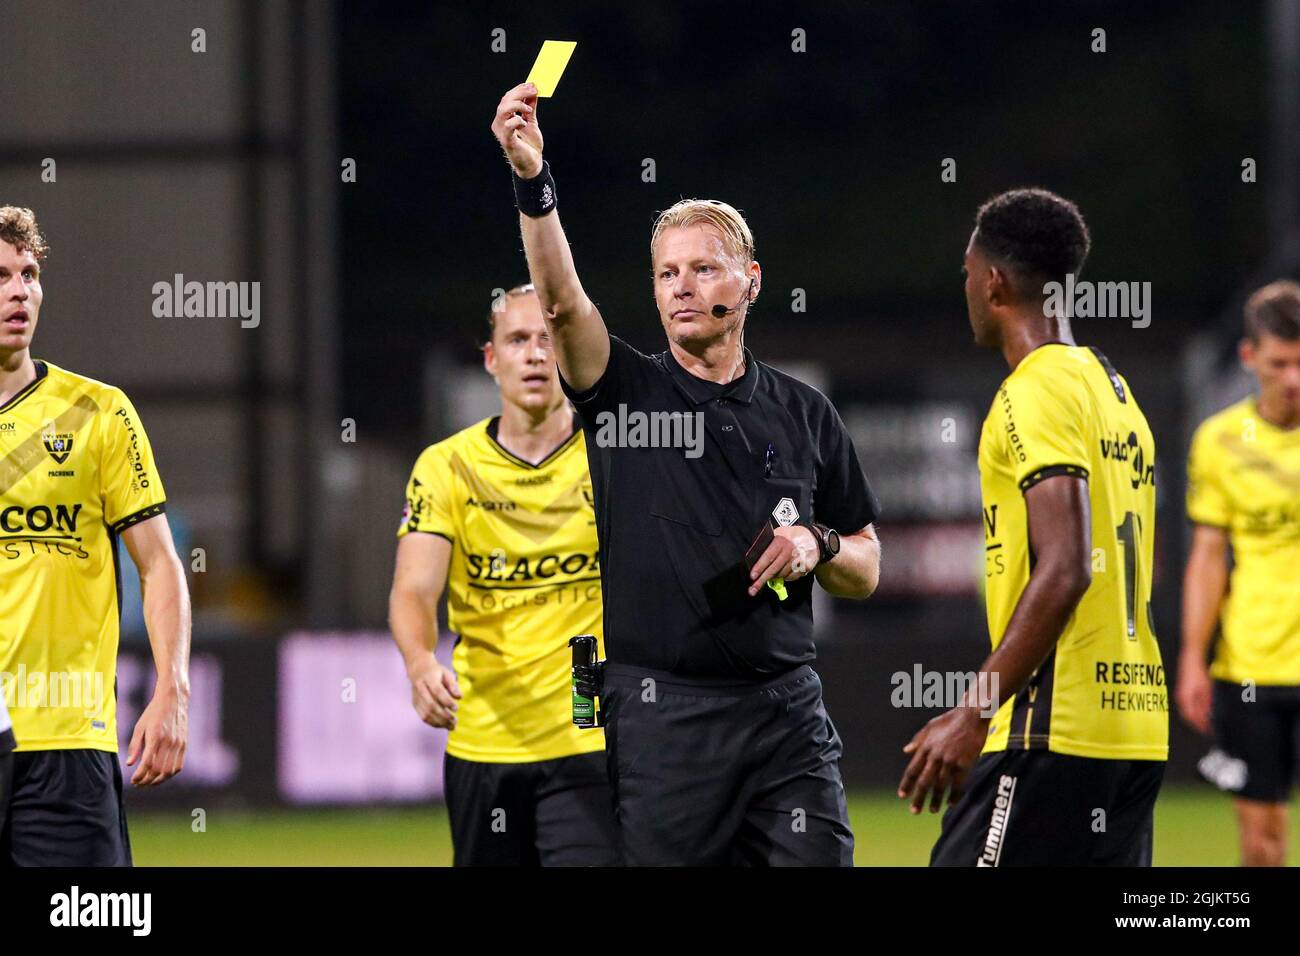 VENLO, NETHERLANDS - SEPTEMBER 10: Referee Kevin Blom showing yellow card  to Victor van den Bogert of FC Den Bosch during the Keukenkampioendivisie  match between VVV Venlo and FC Den Bosch at